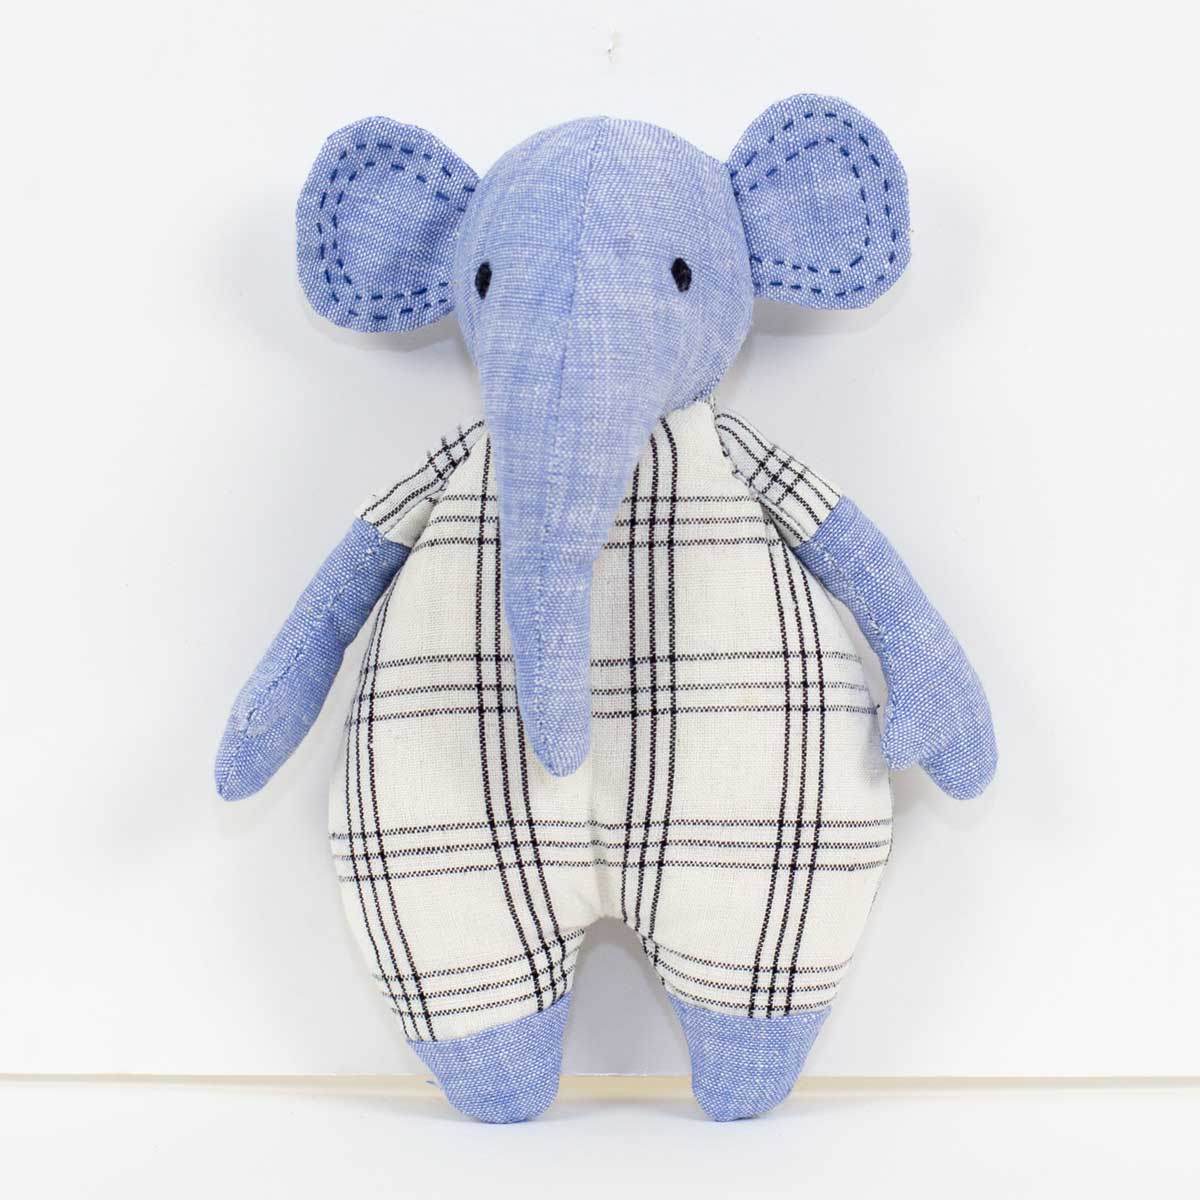 SOFT ELEPHANT Soft toy